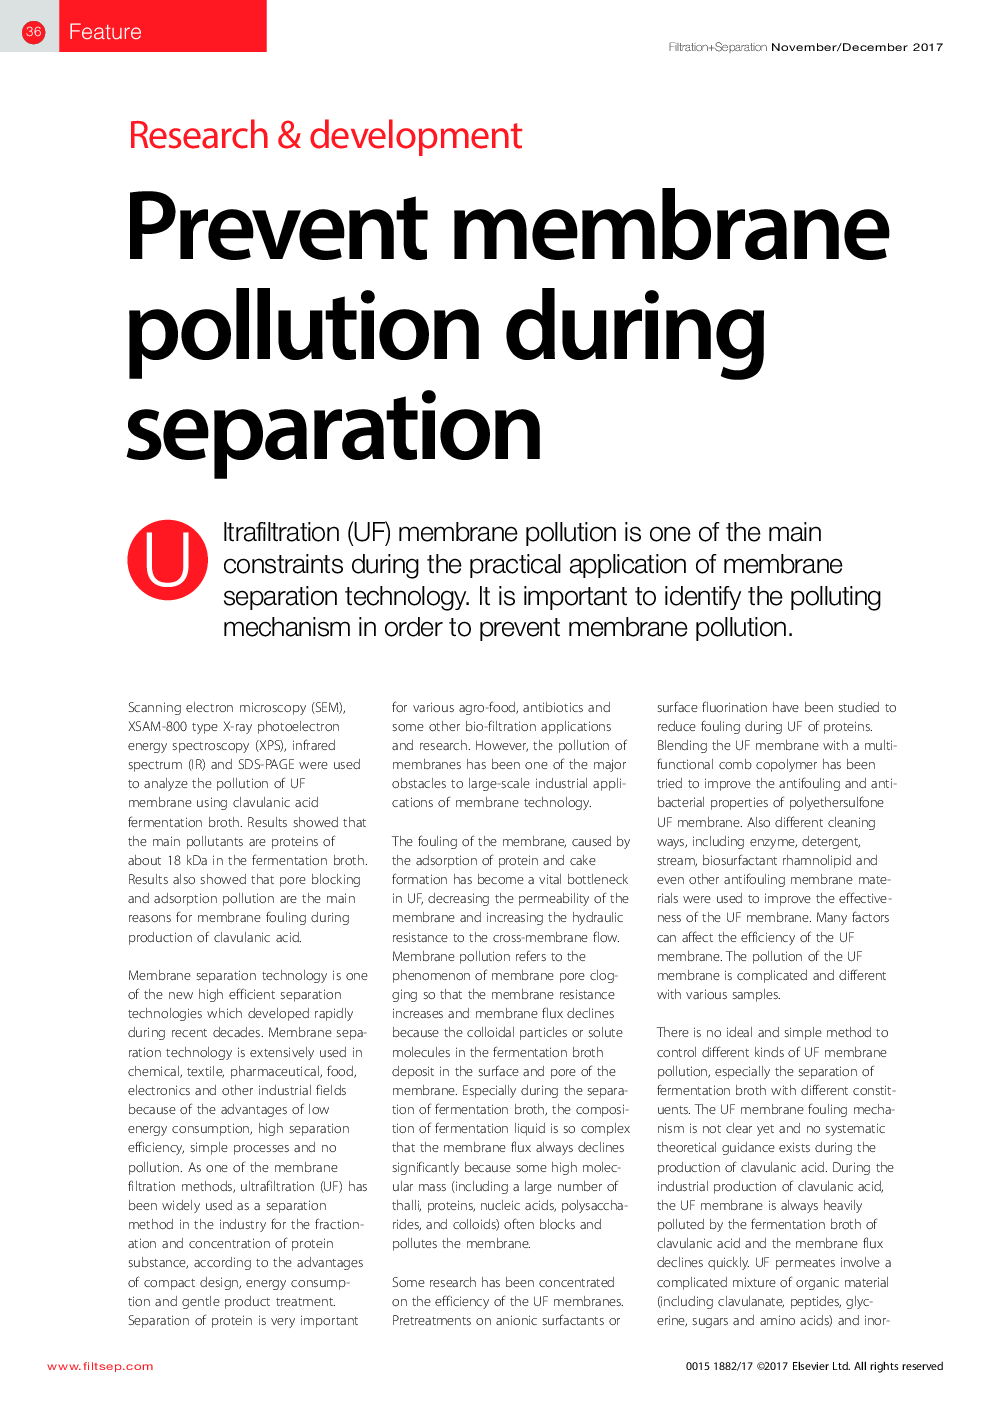 Prevent membrane pollution during separation